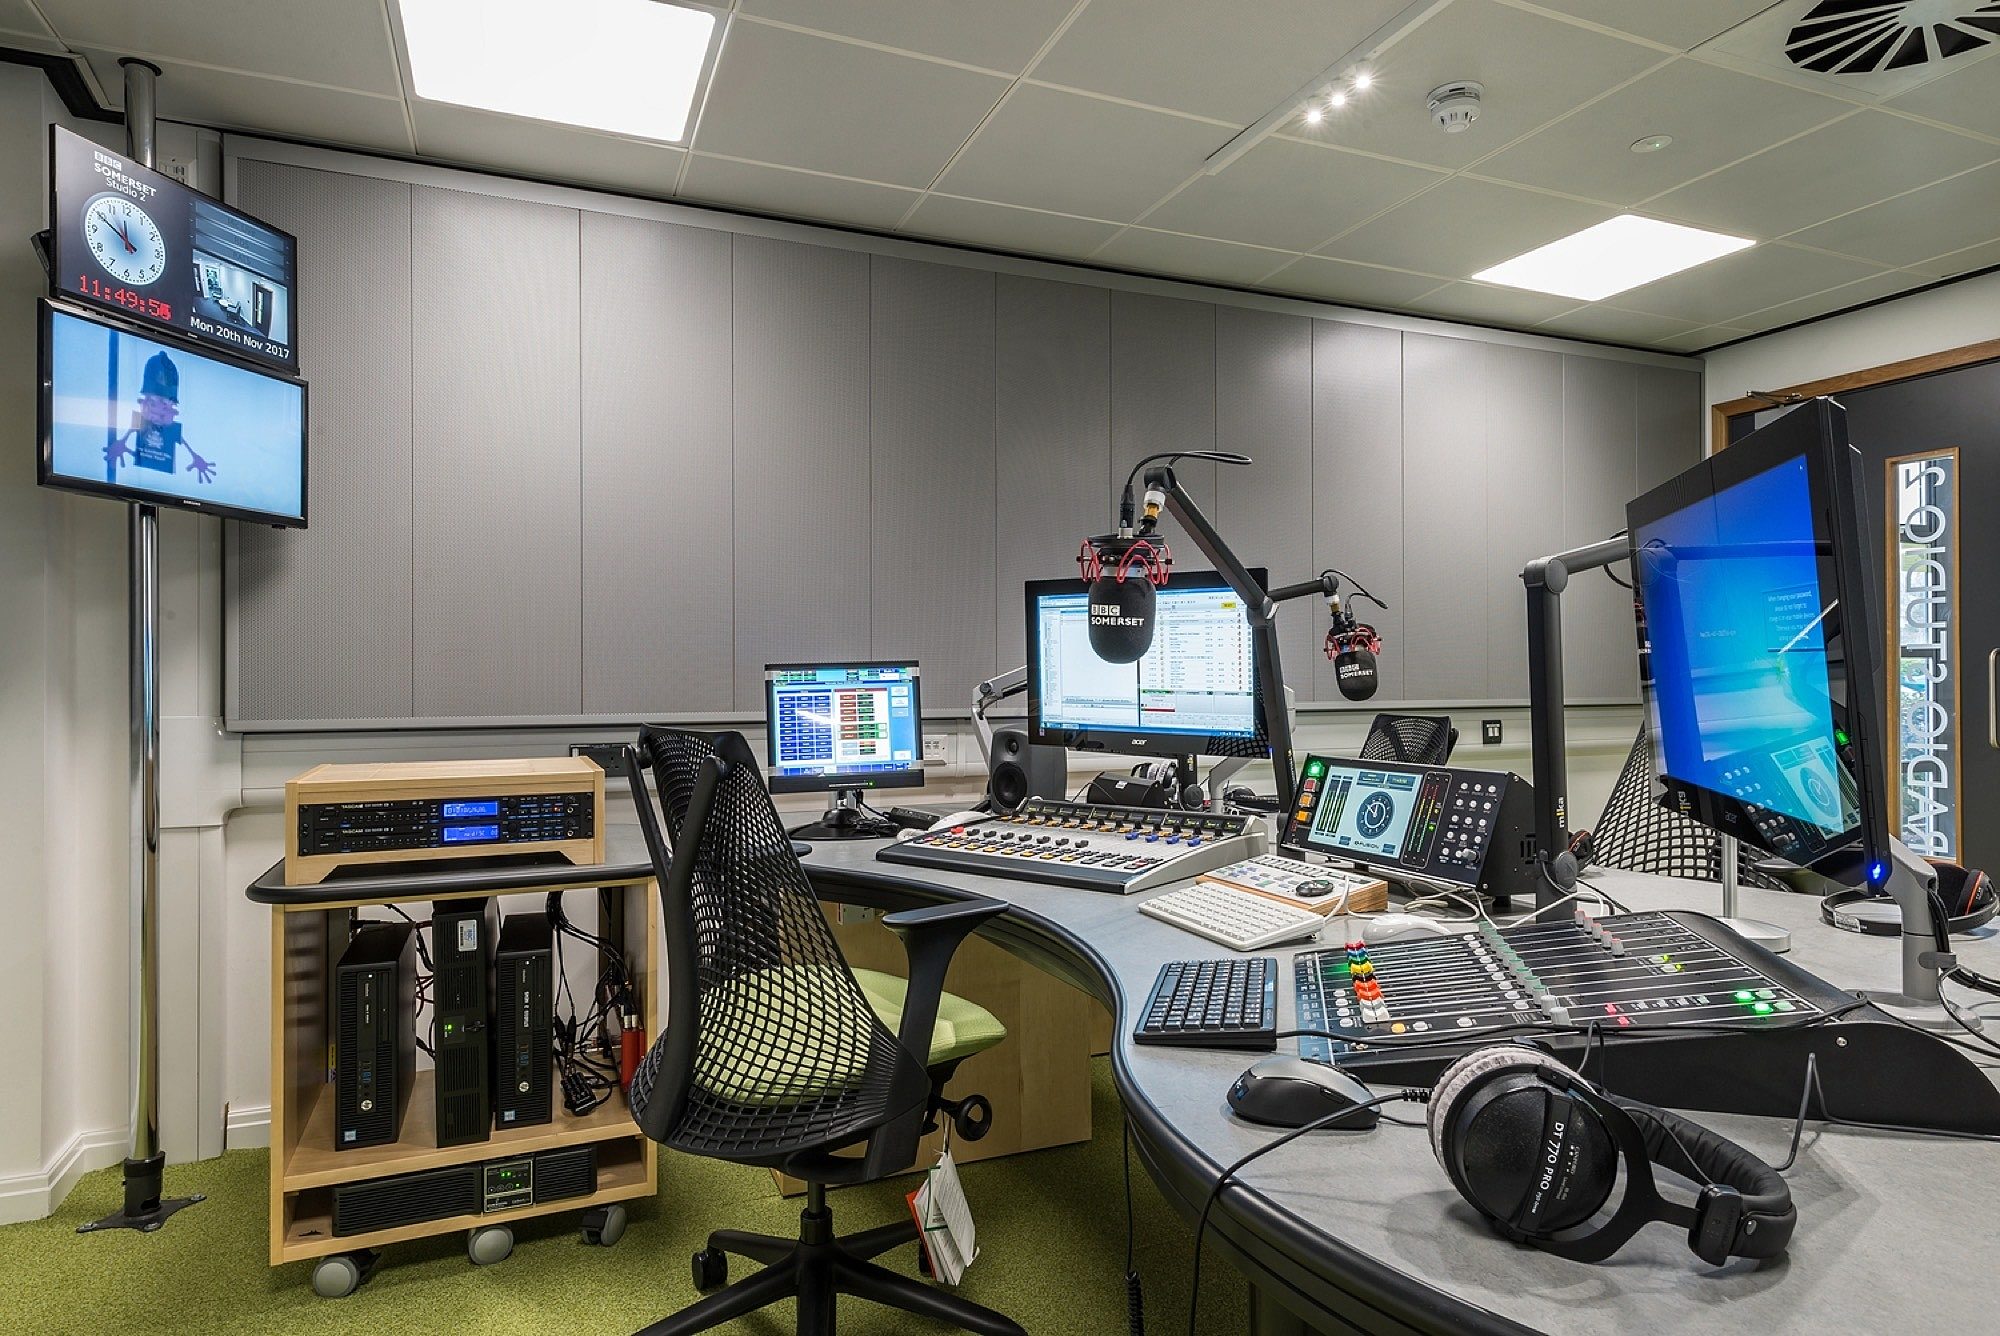 BBC radio studio fit out